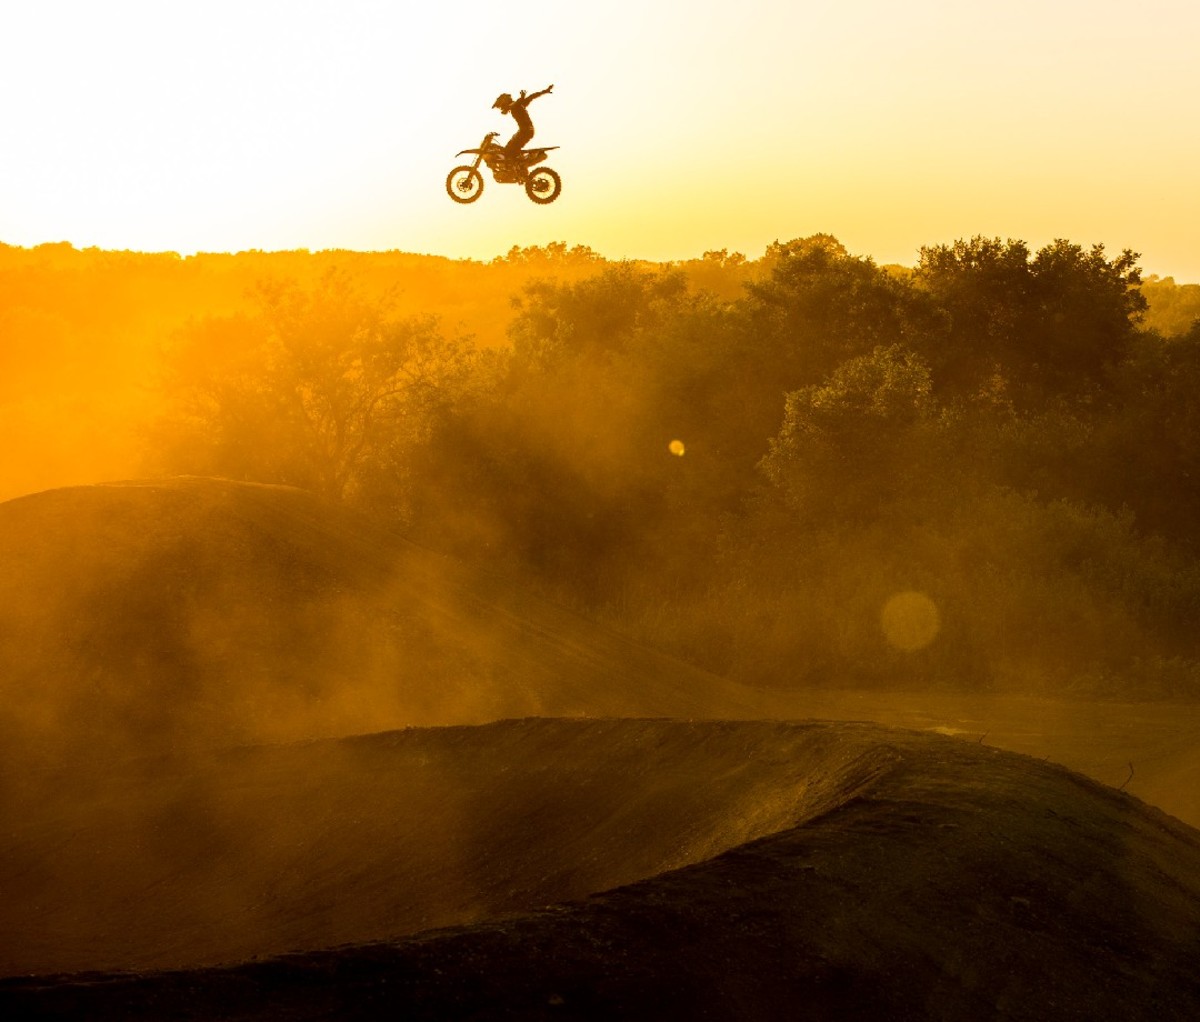 Motocross rider mid-air at sunset